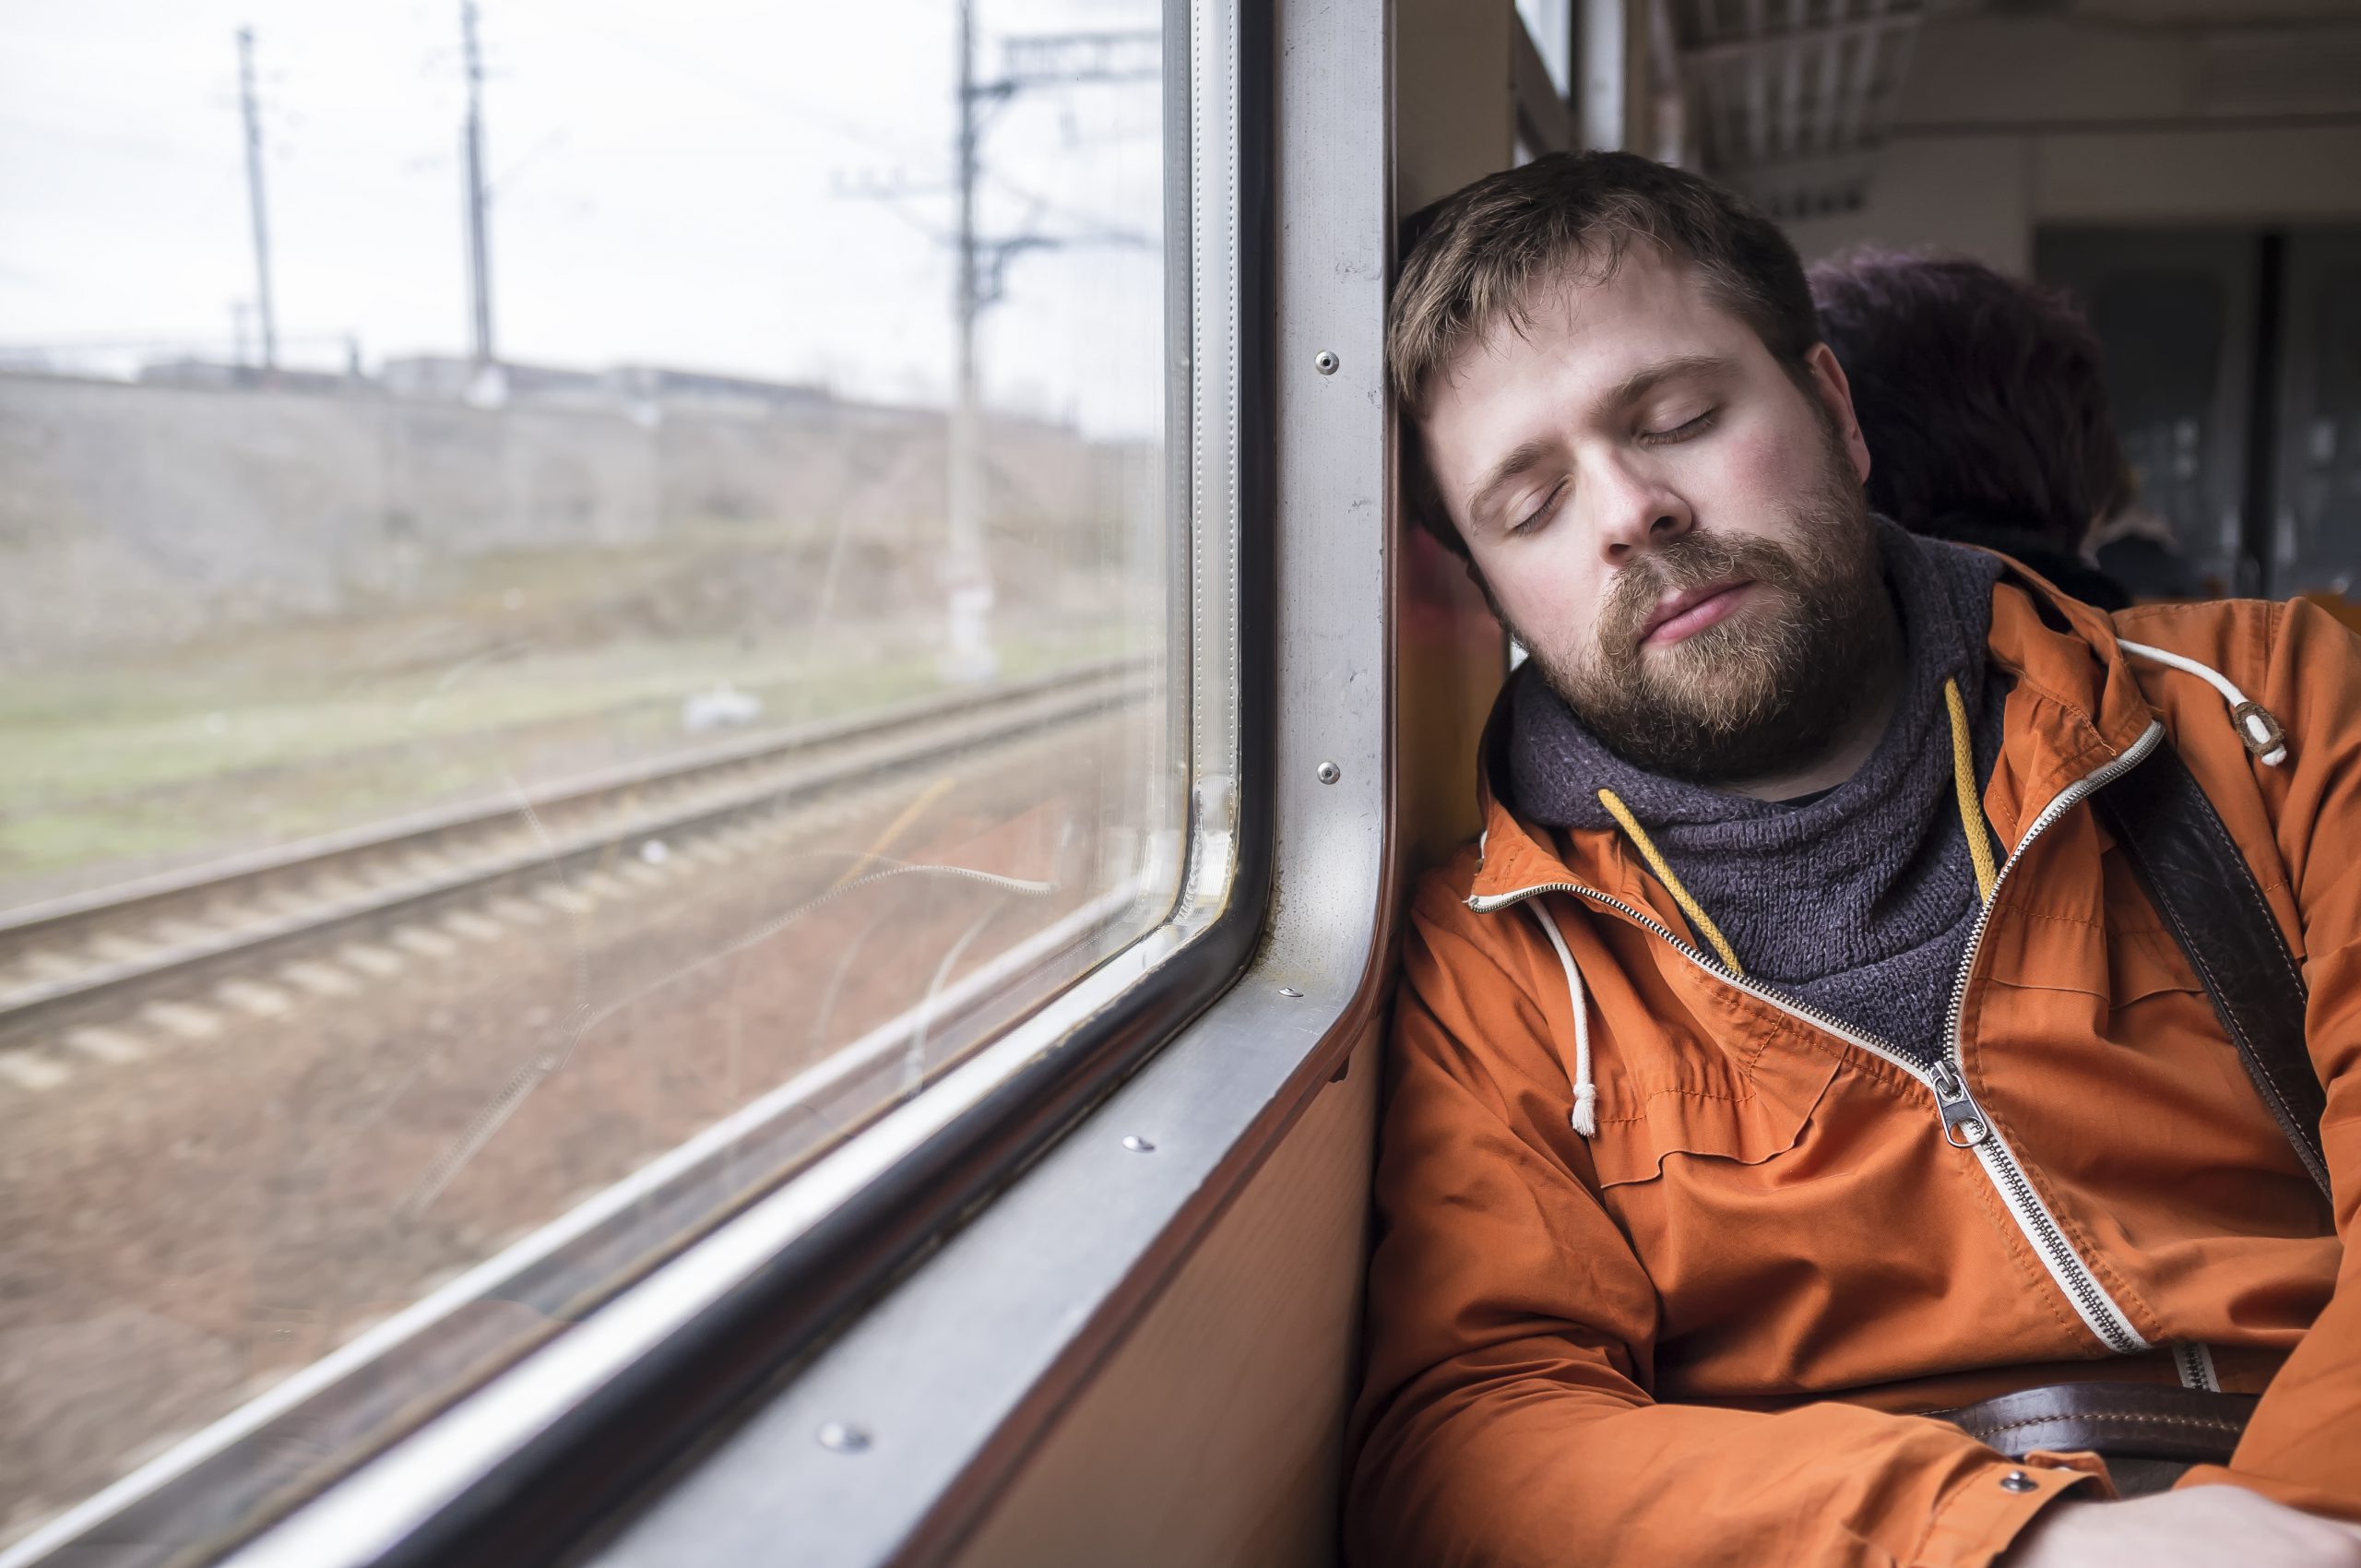 Susah Tidur Di Pesawat Atau Kereta? Atasi dengan Tips Berikut